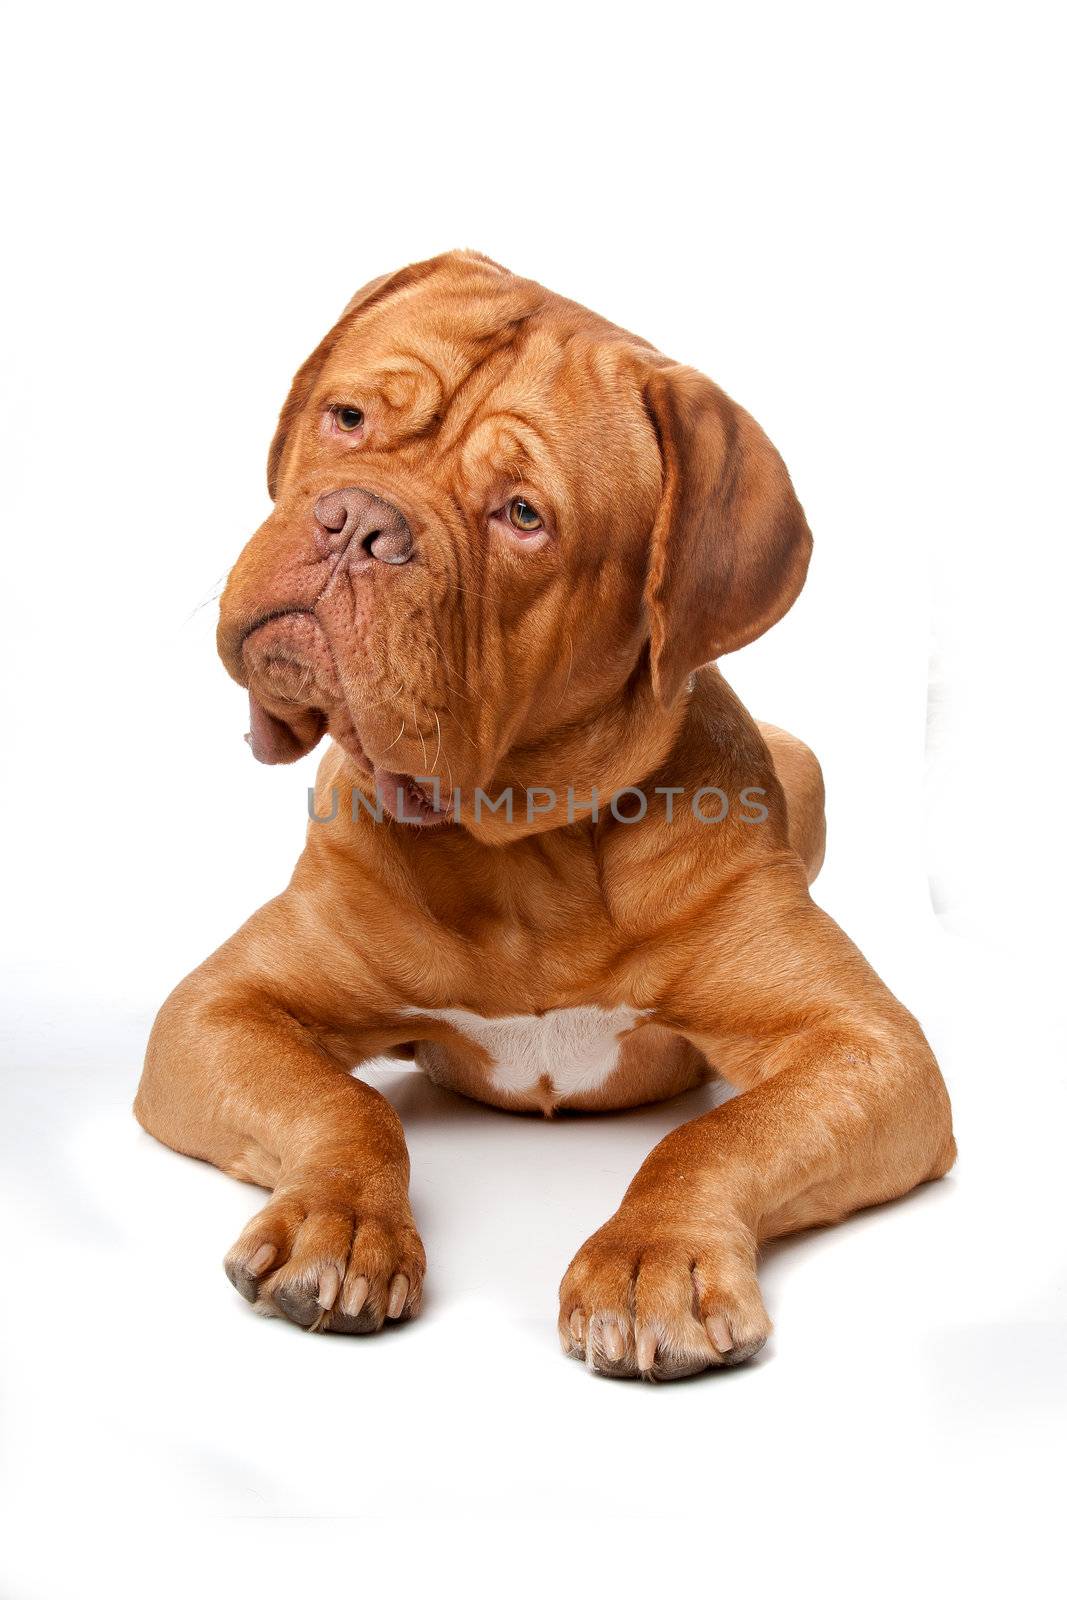 Dogue de Bordeaux (French mastiff) by eriklam